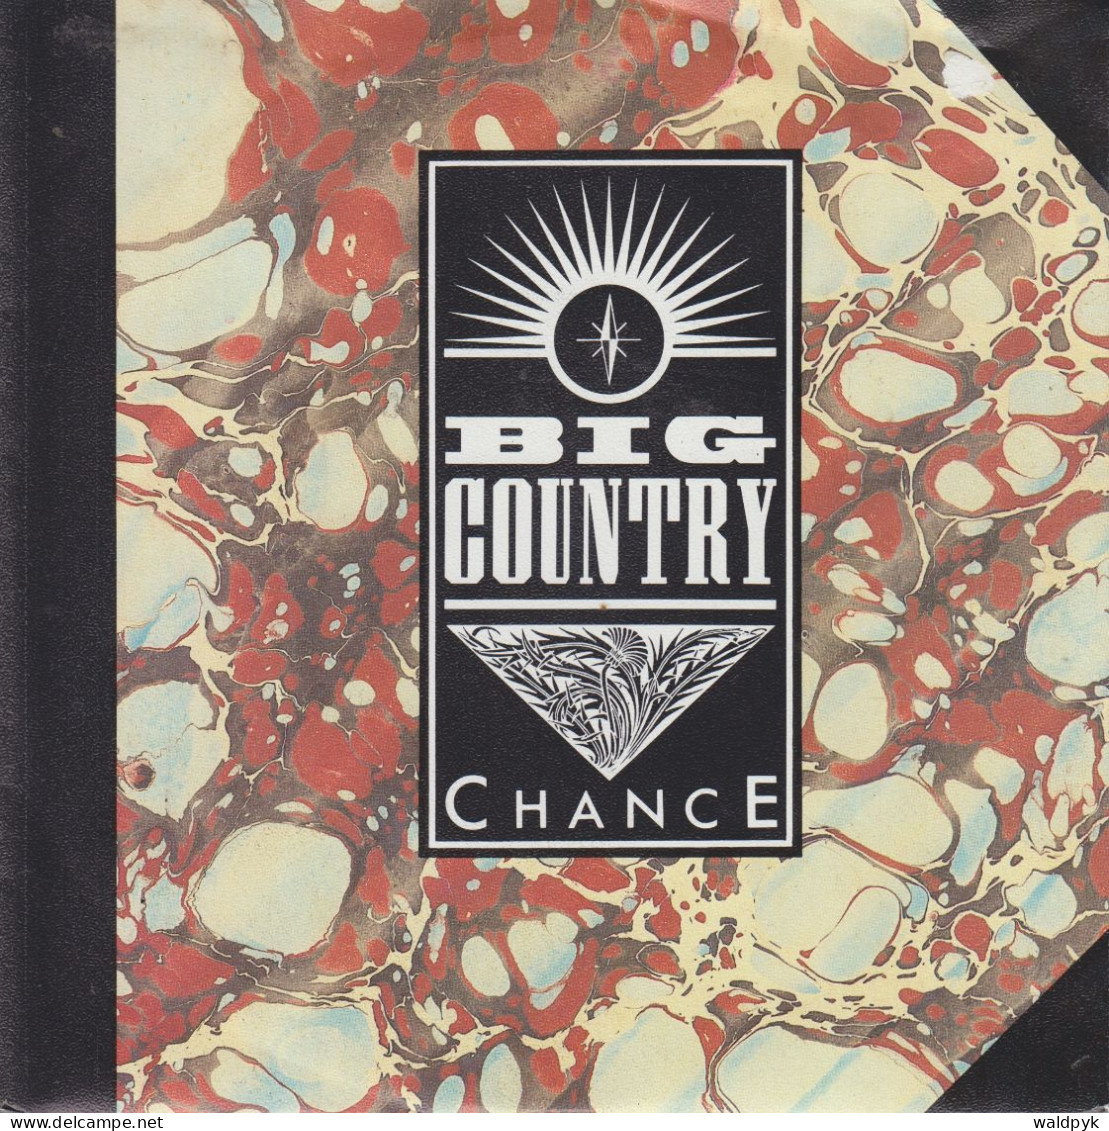 BIG COUNTRY - Chance - Otros - Canción Inglesa